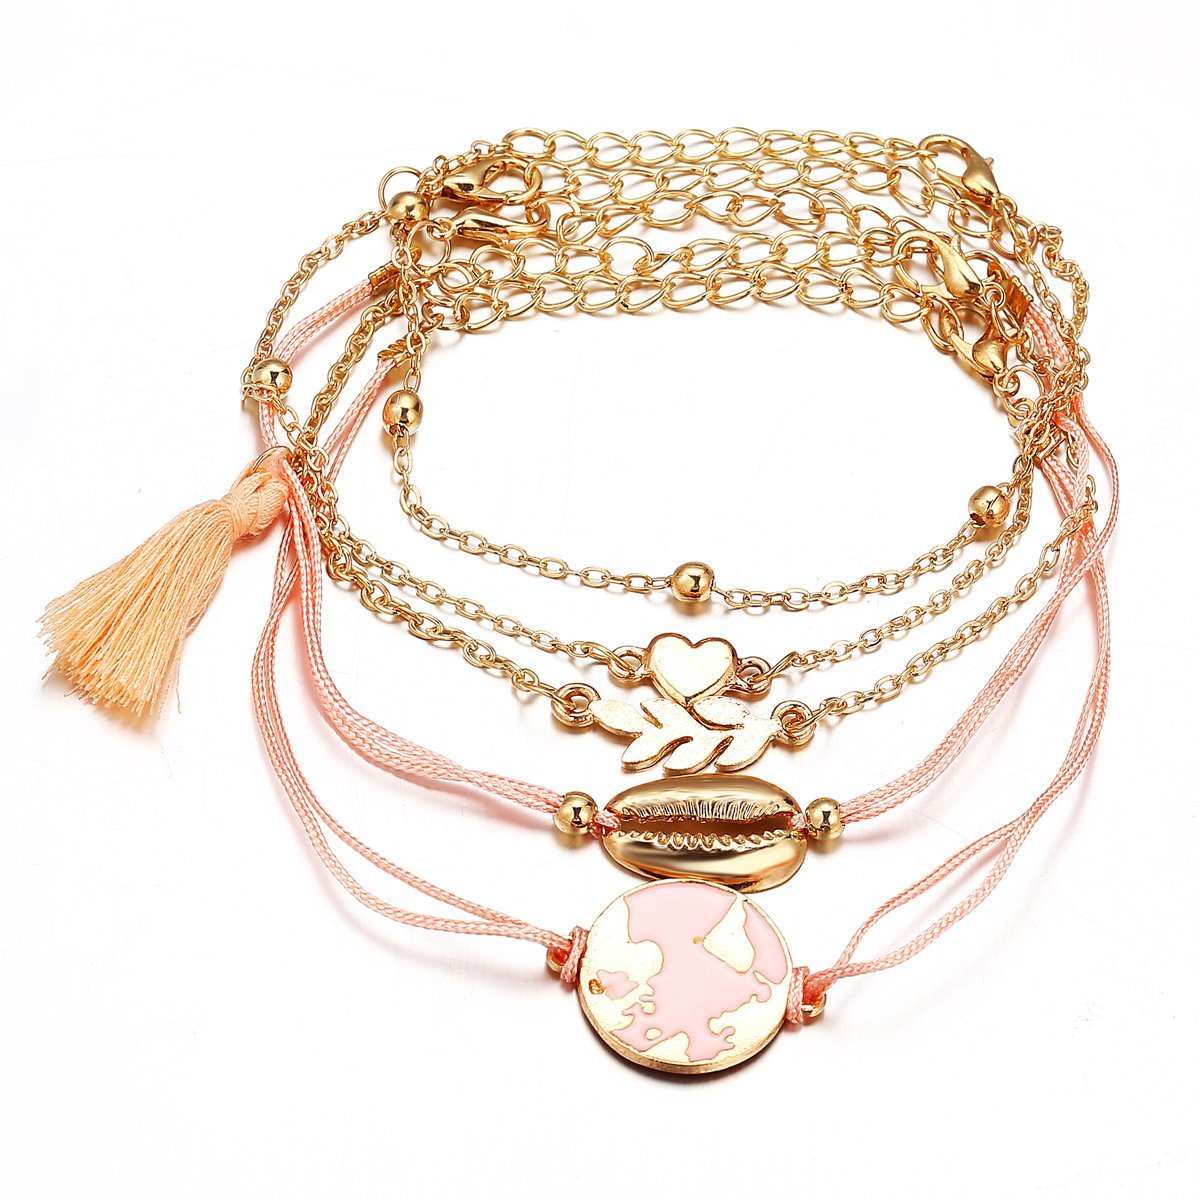 5 Piece Pink Global Tassell Bracelet Set 18K Rose Gold Plated Bracelet ITALY Design Elsy Style Bracelet